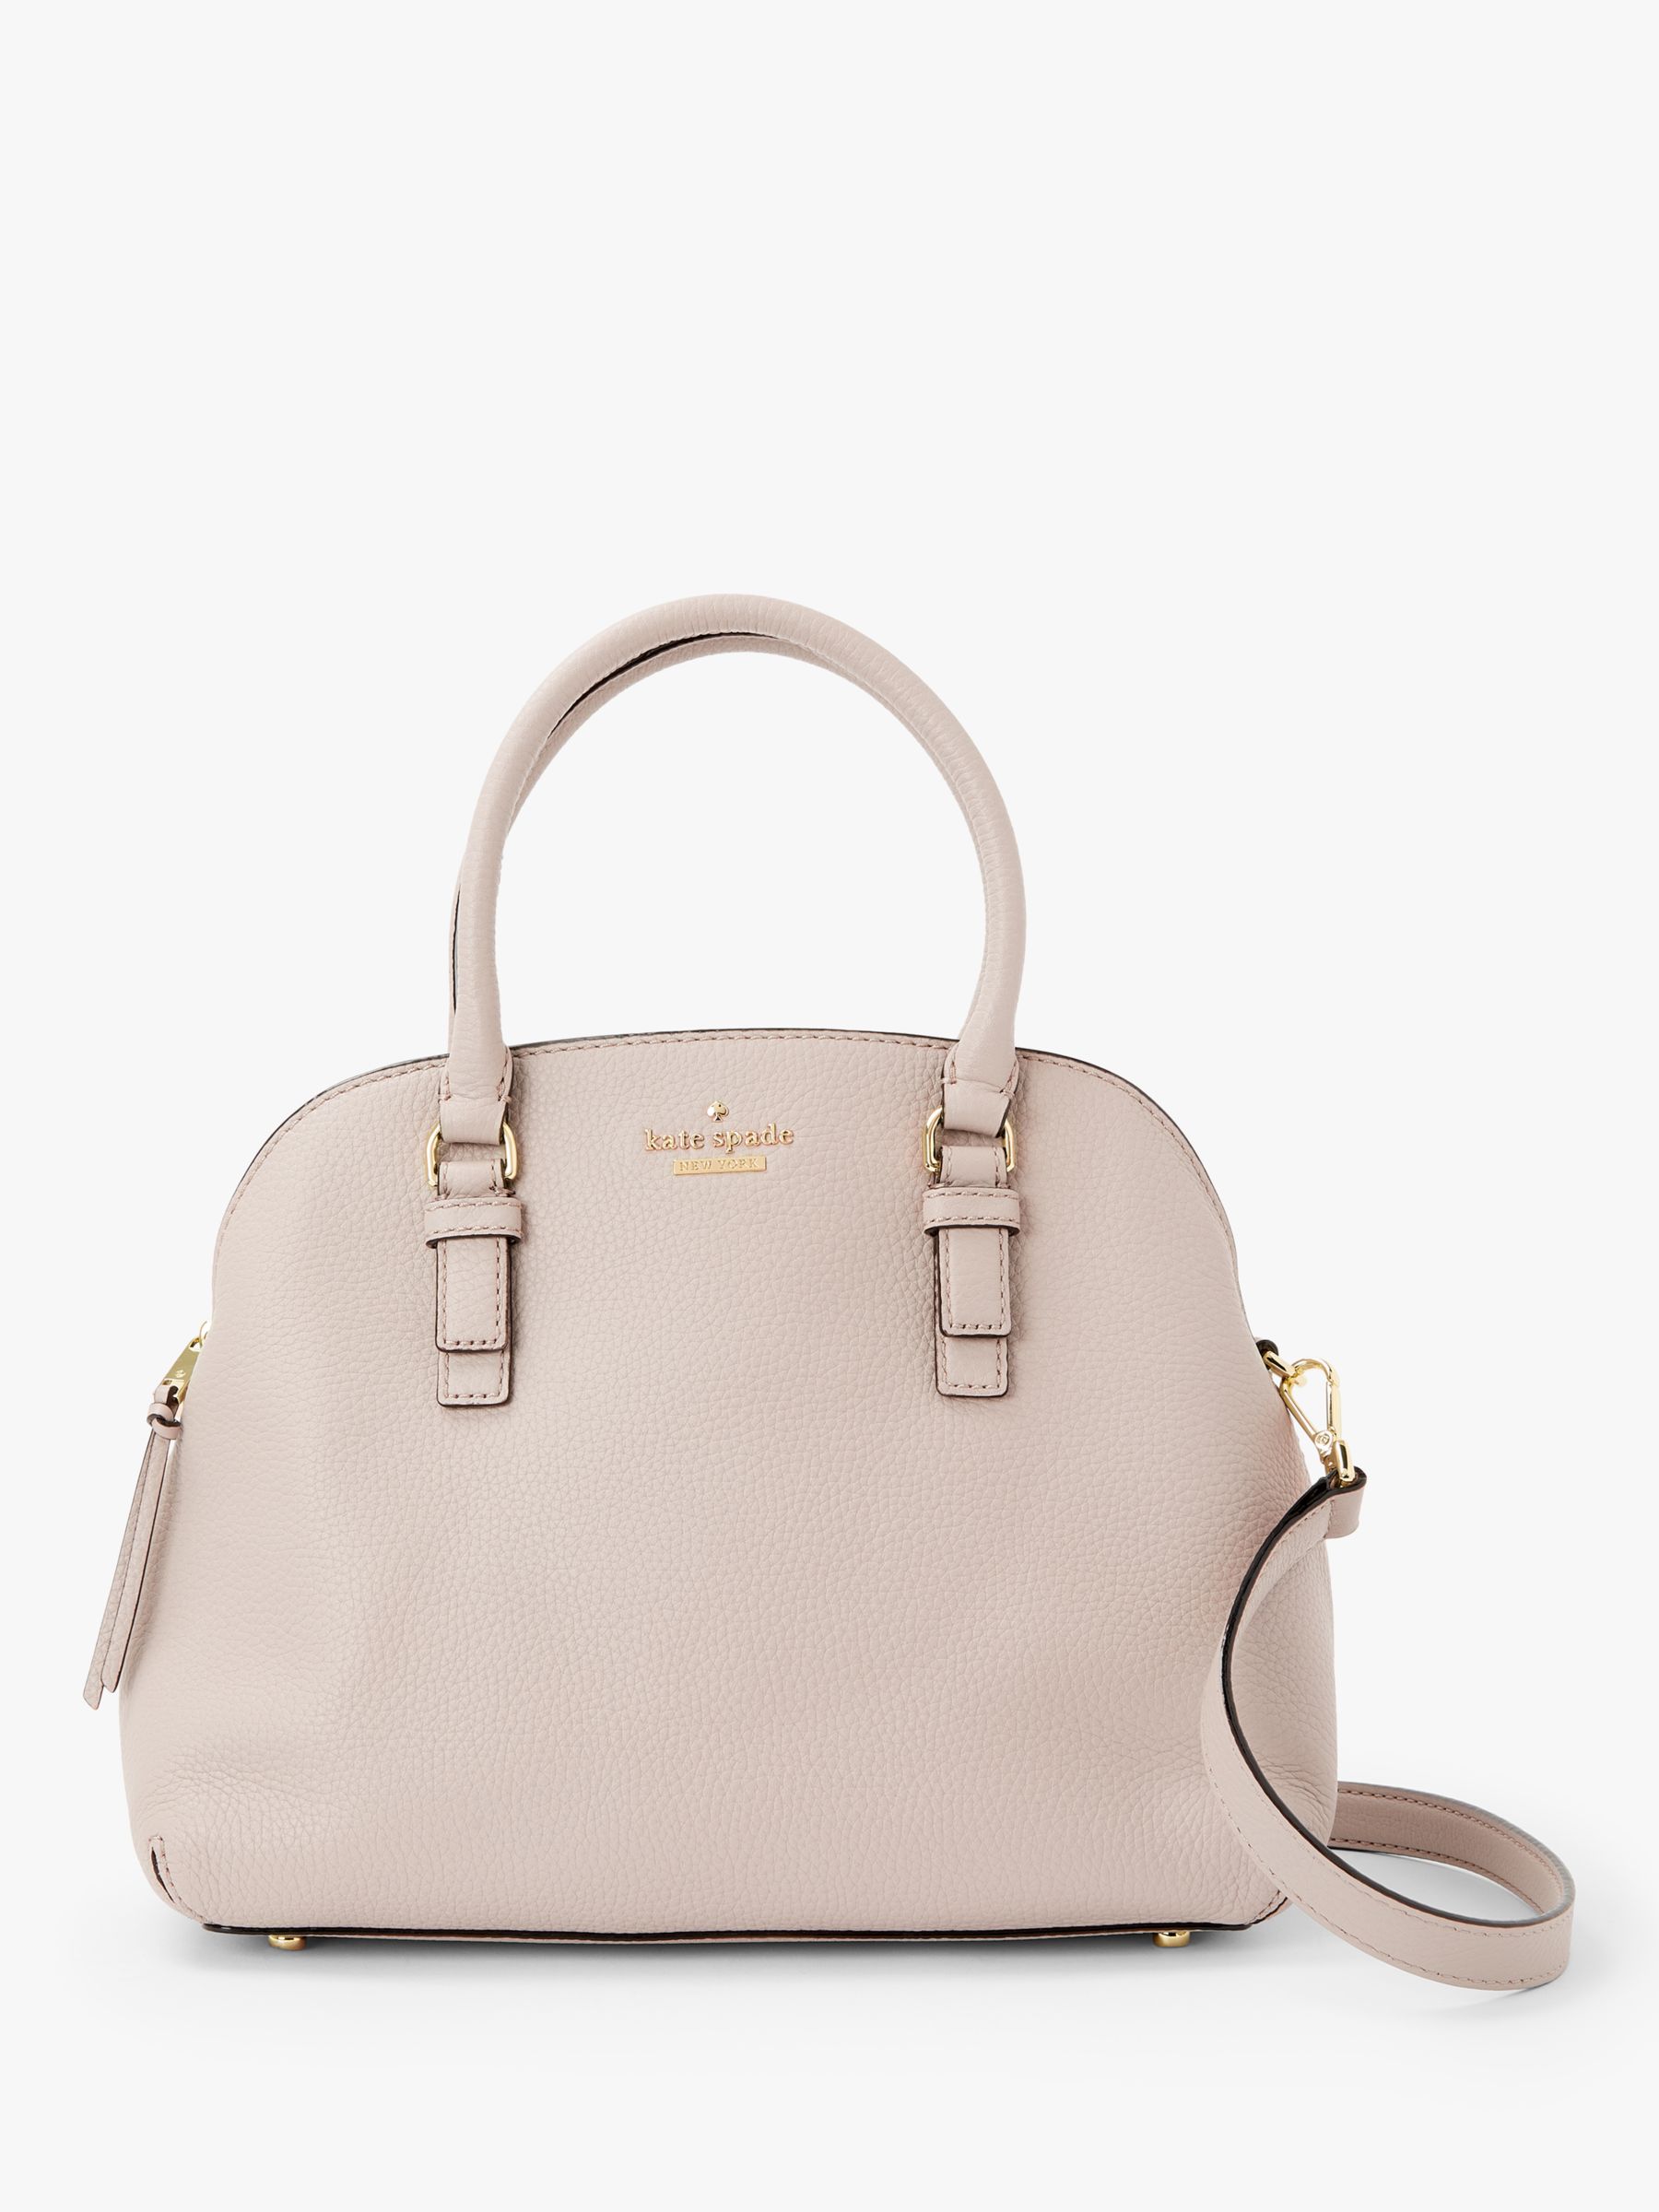 Kate Spade New York Jackson Street Large Lane Satchel Reviews Handbags  Accessories Macy's 